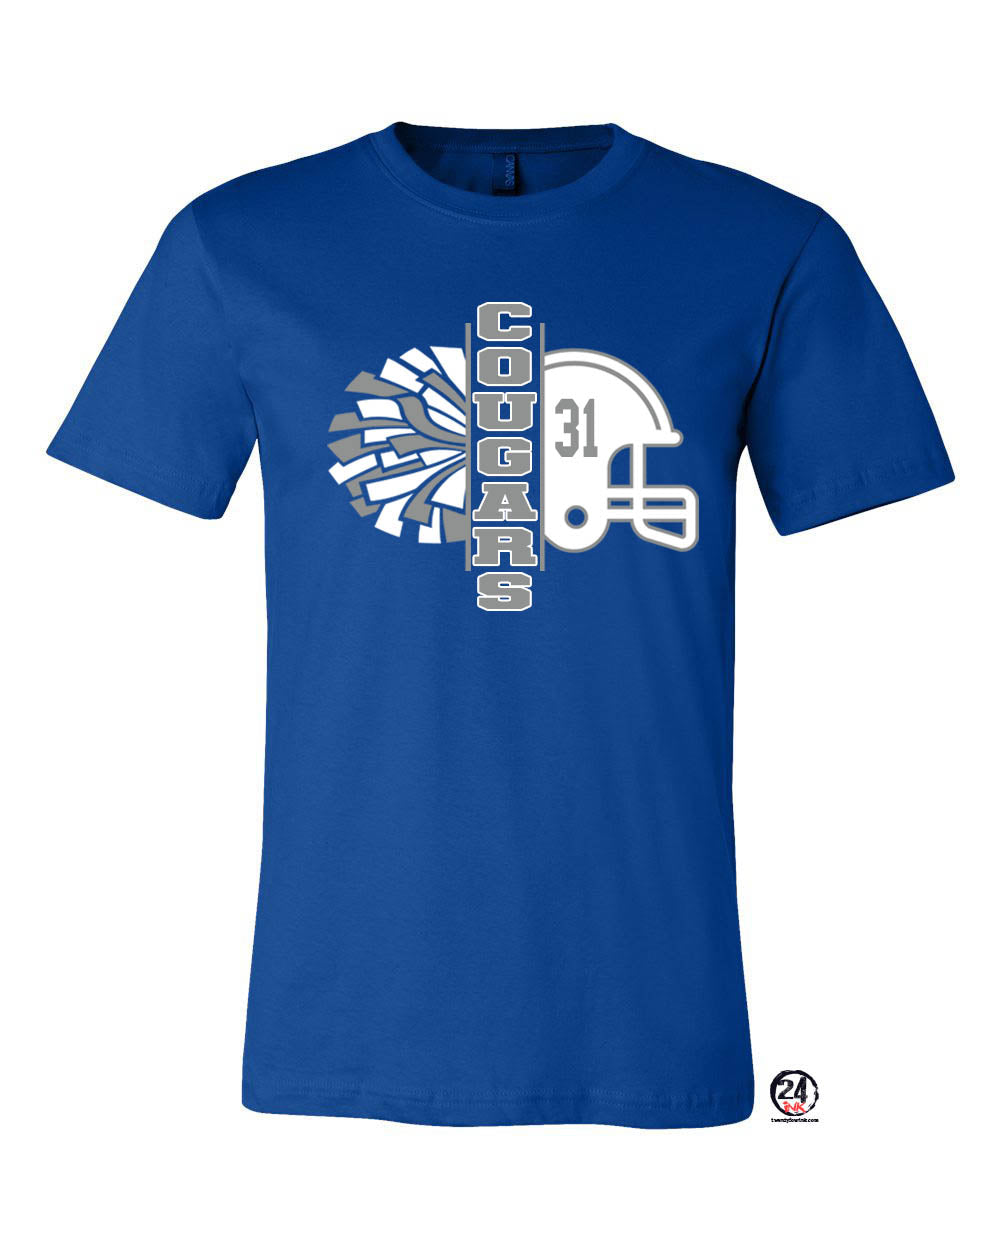 Cougars Football Design 7 t-Shirt